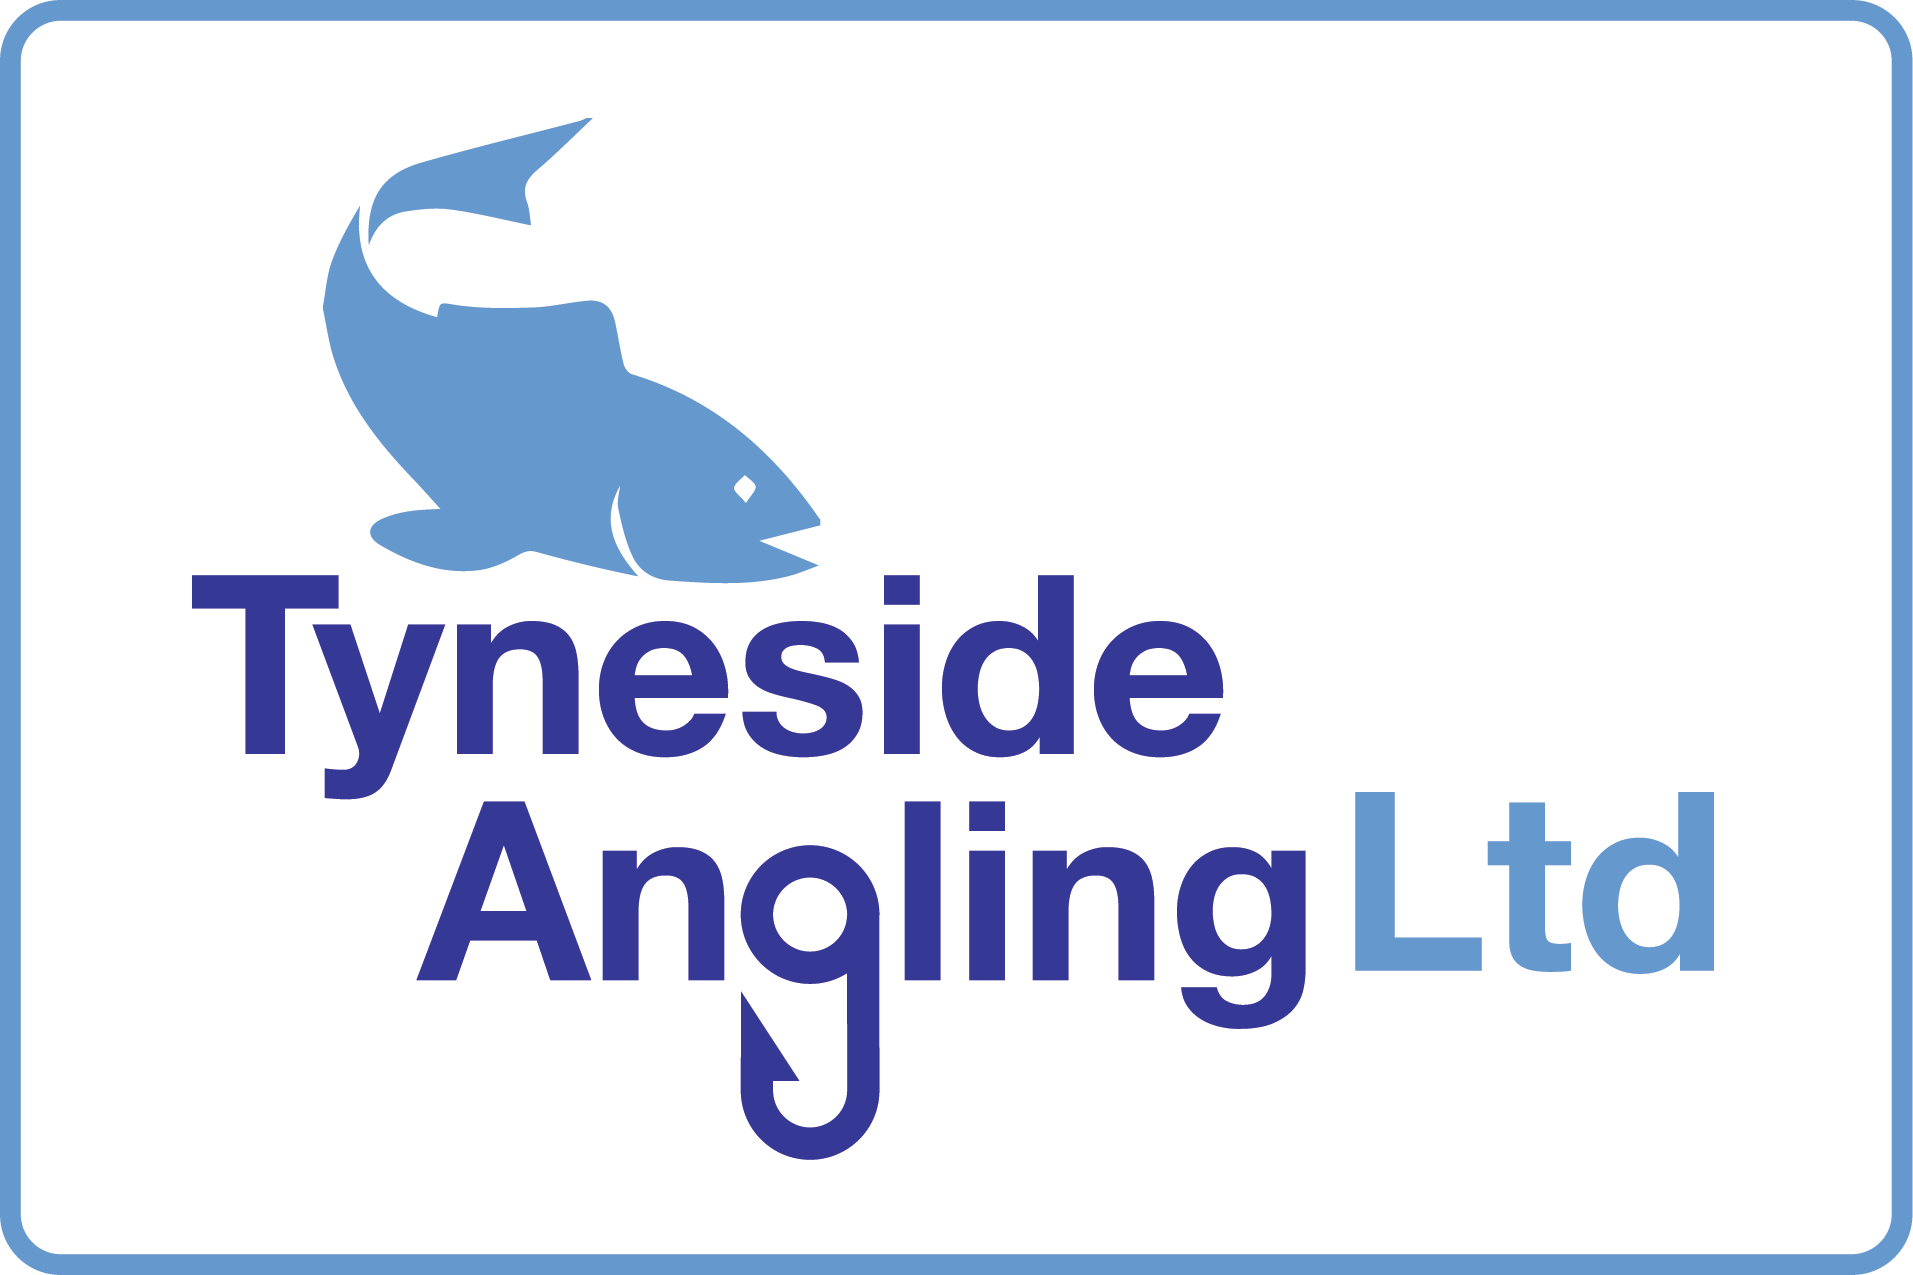 Tyneside Angling Ltd